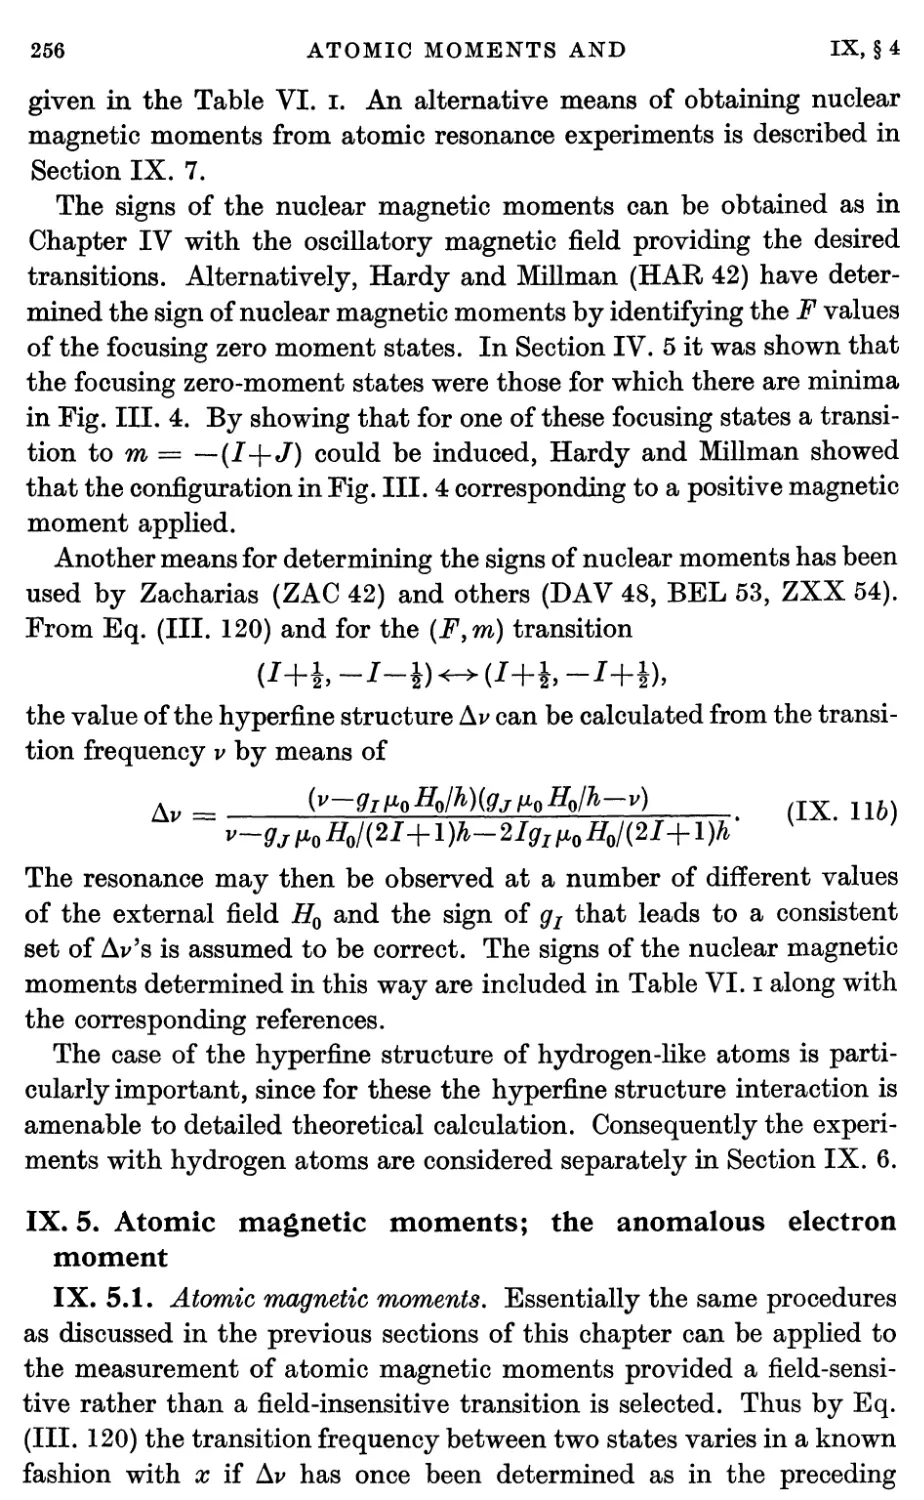 IX.5. Atomic Magnetic Moments; The Anomalous Electron Moment